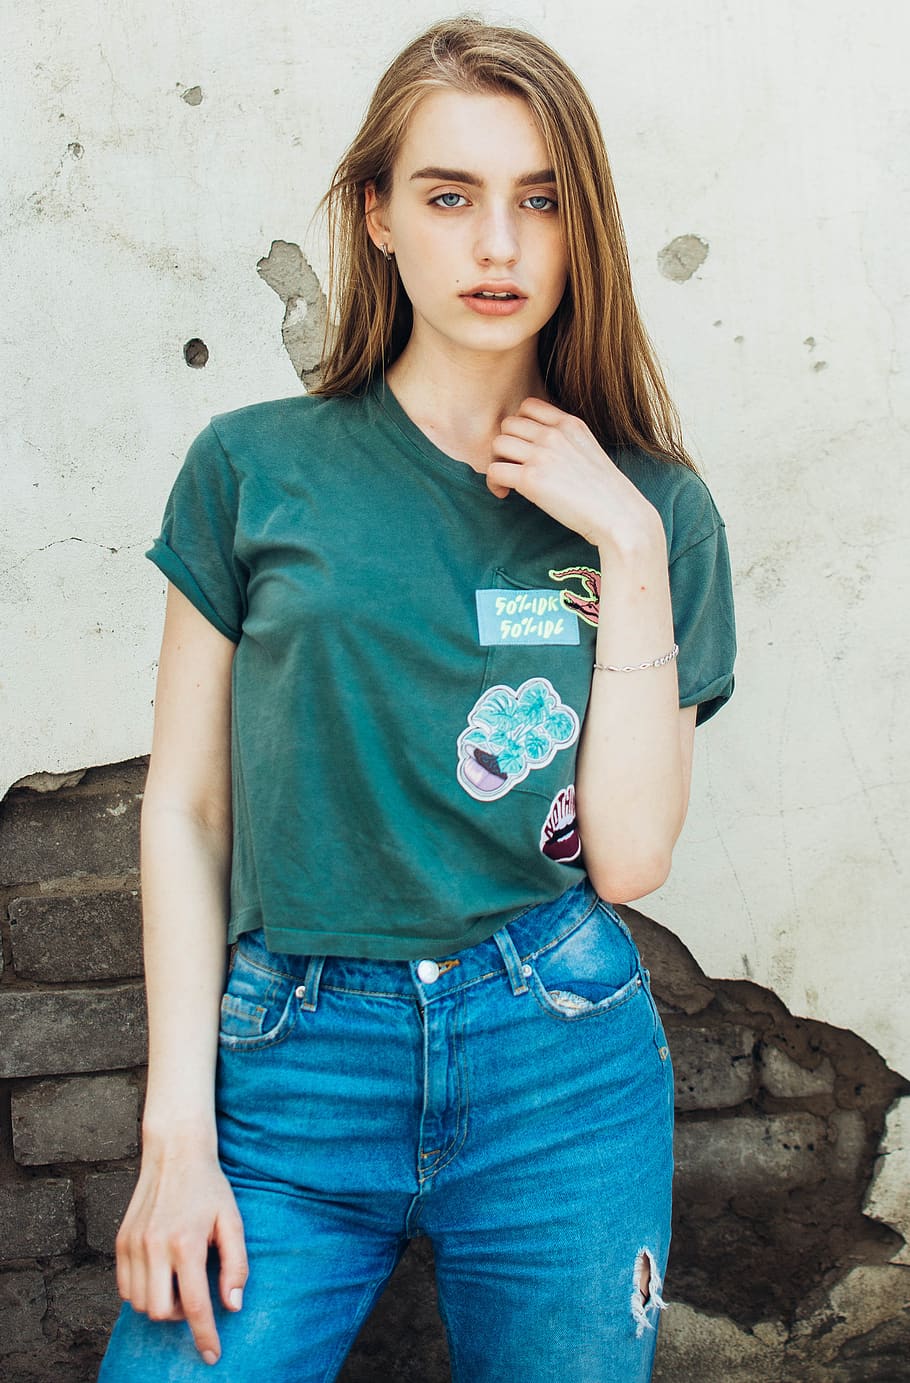 woman wearing green crew-neck t-shirt and blue jeans standing beside wall, HD wallpaper